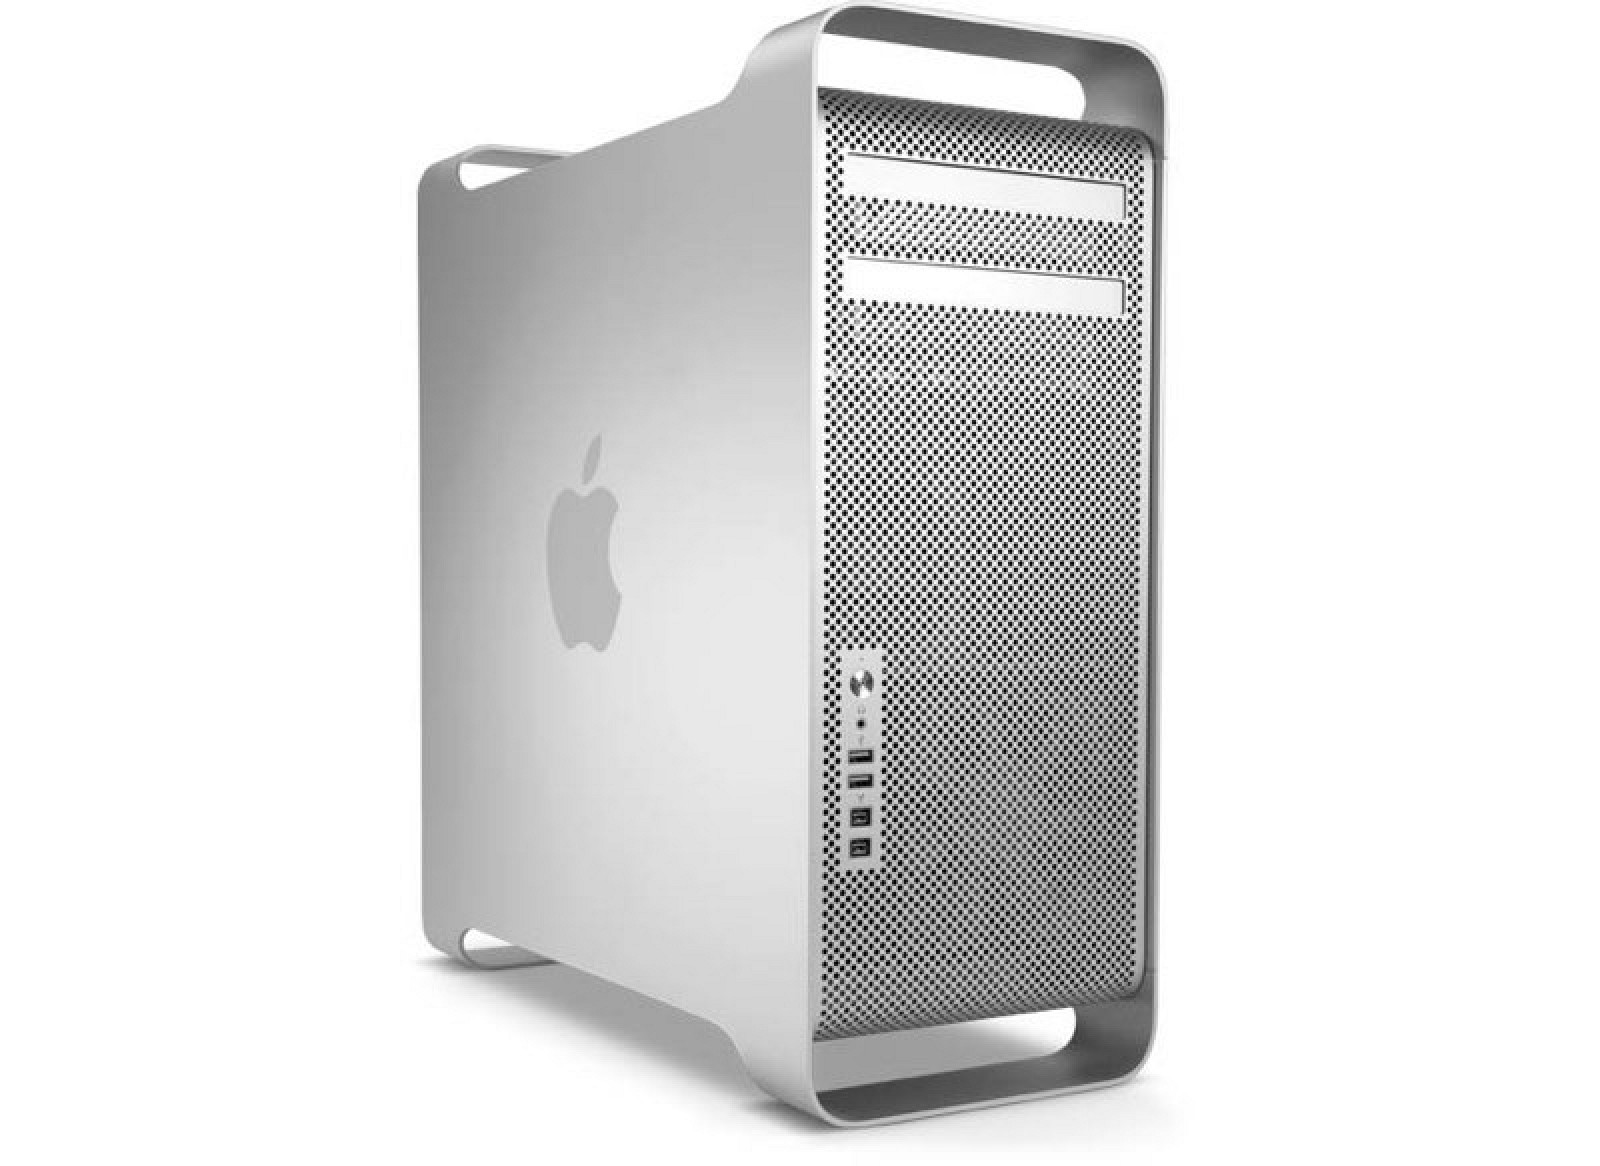 Mac Pro 2010